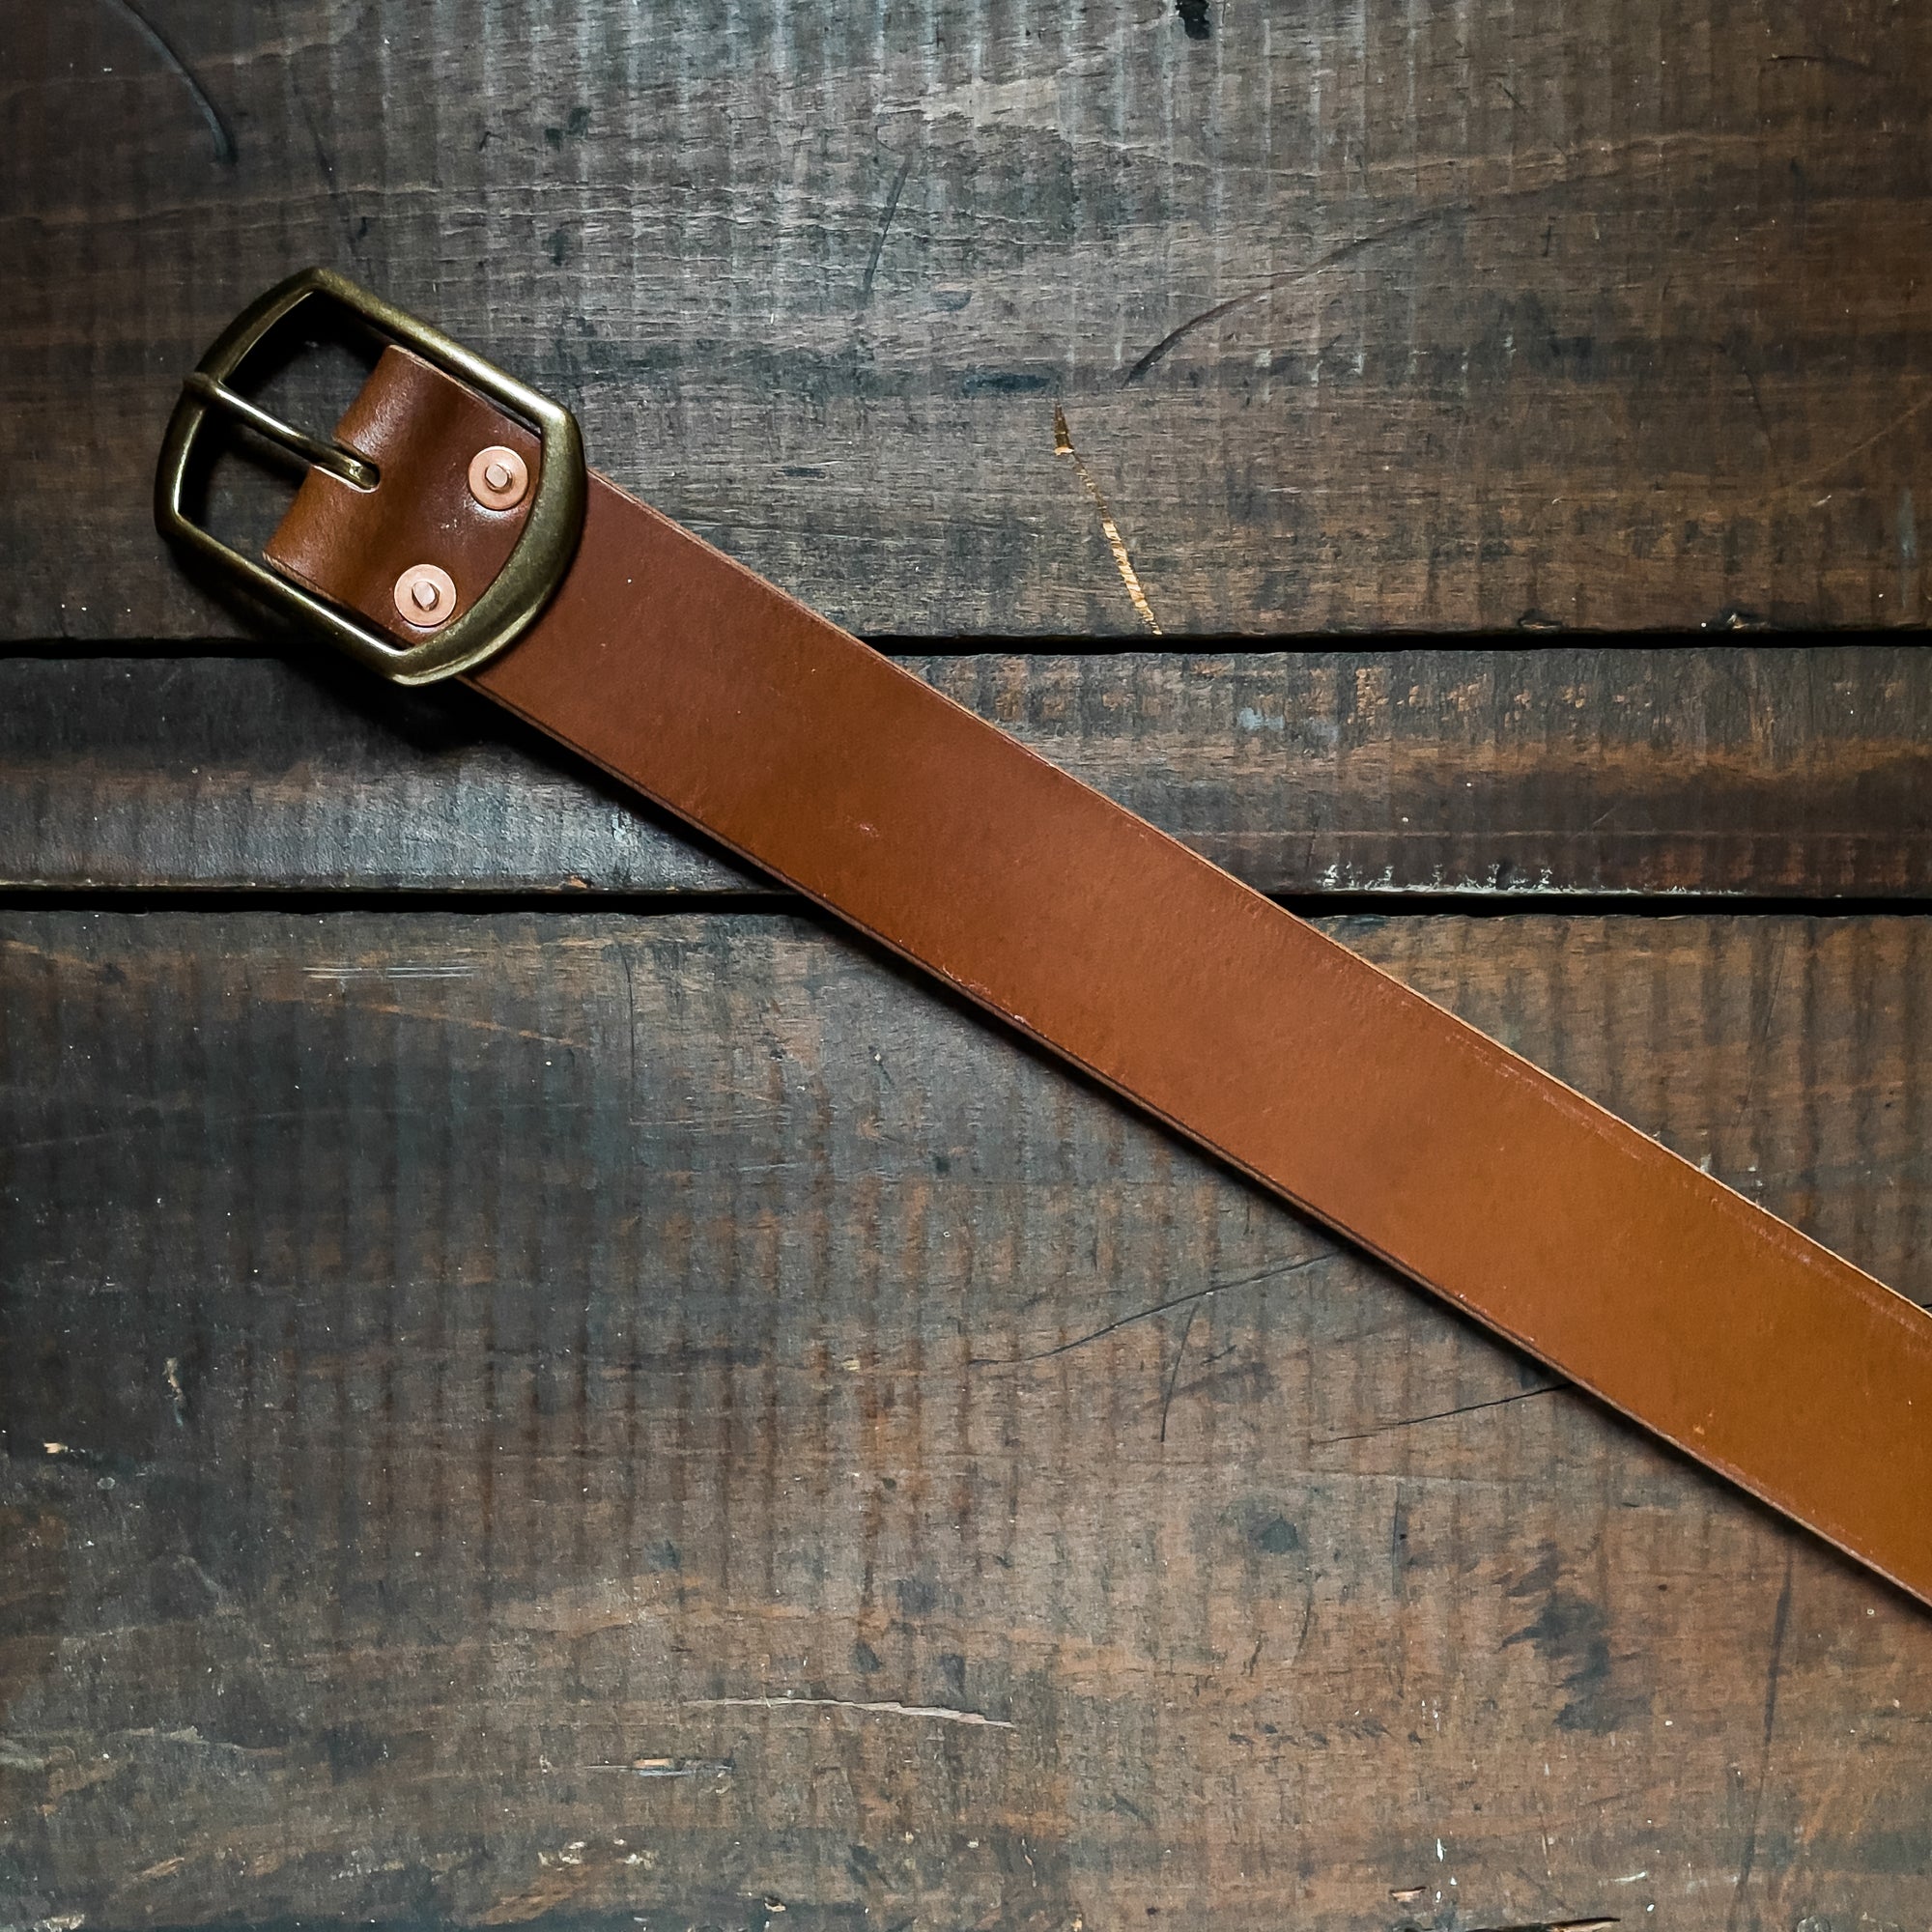 Jack Marc Fashion Brown Leather Needle Buckle Belt For Men